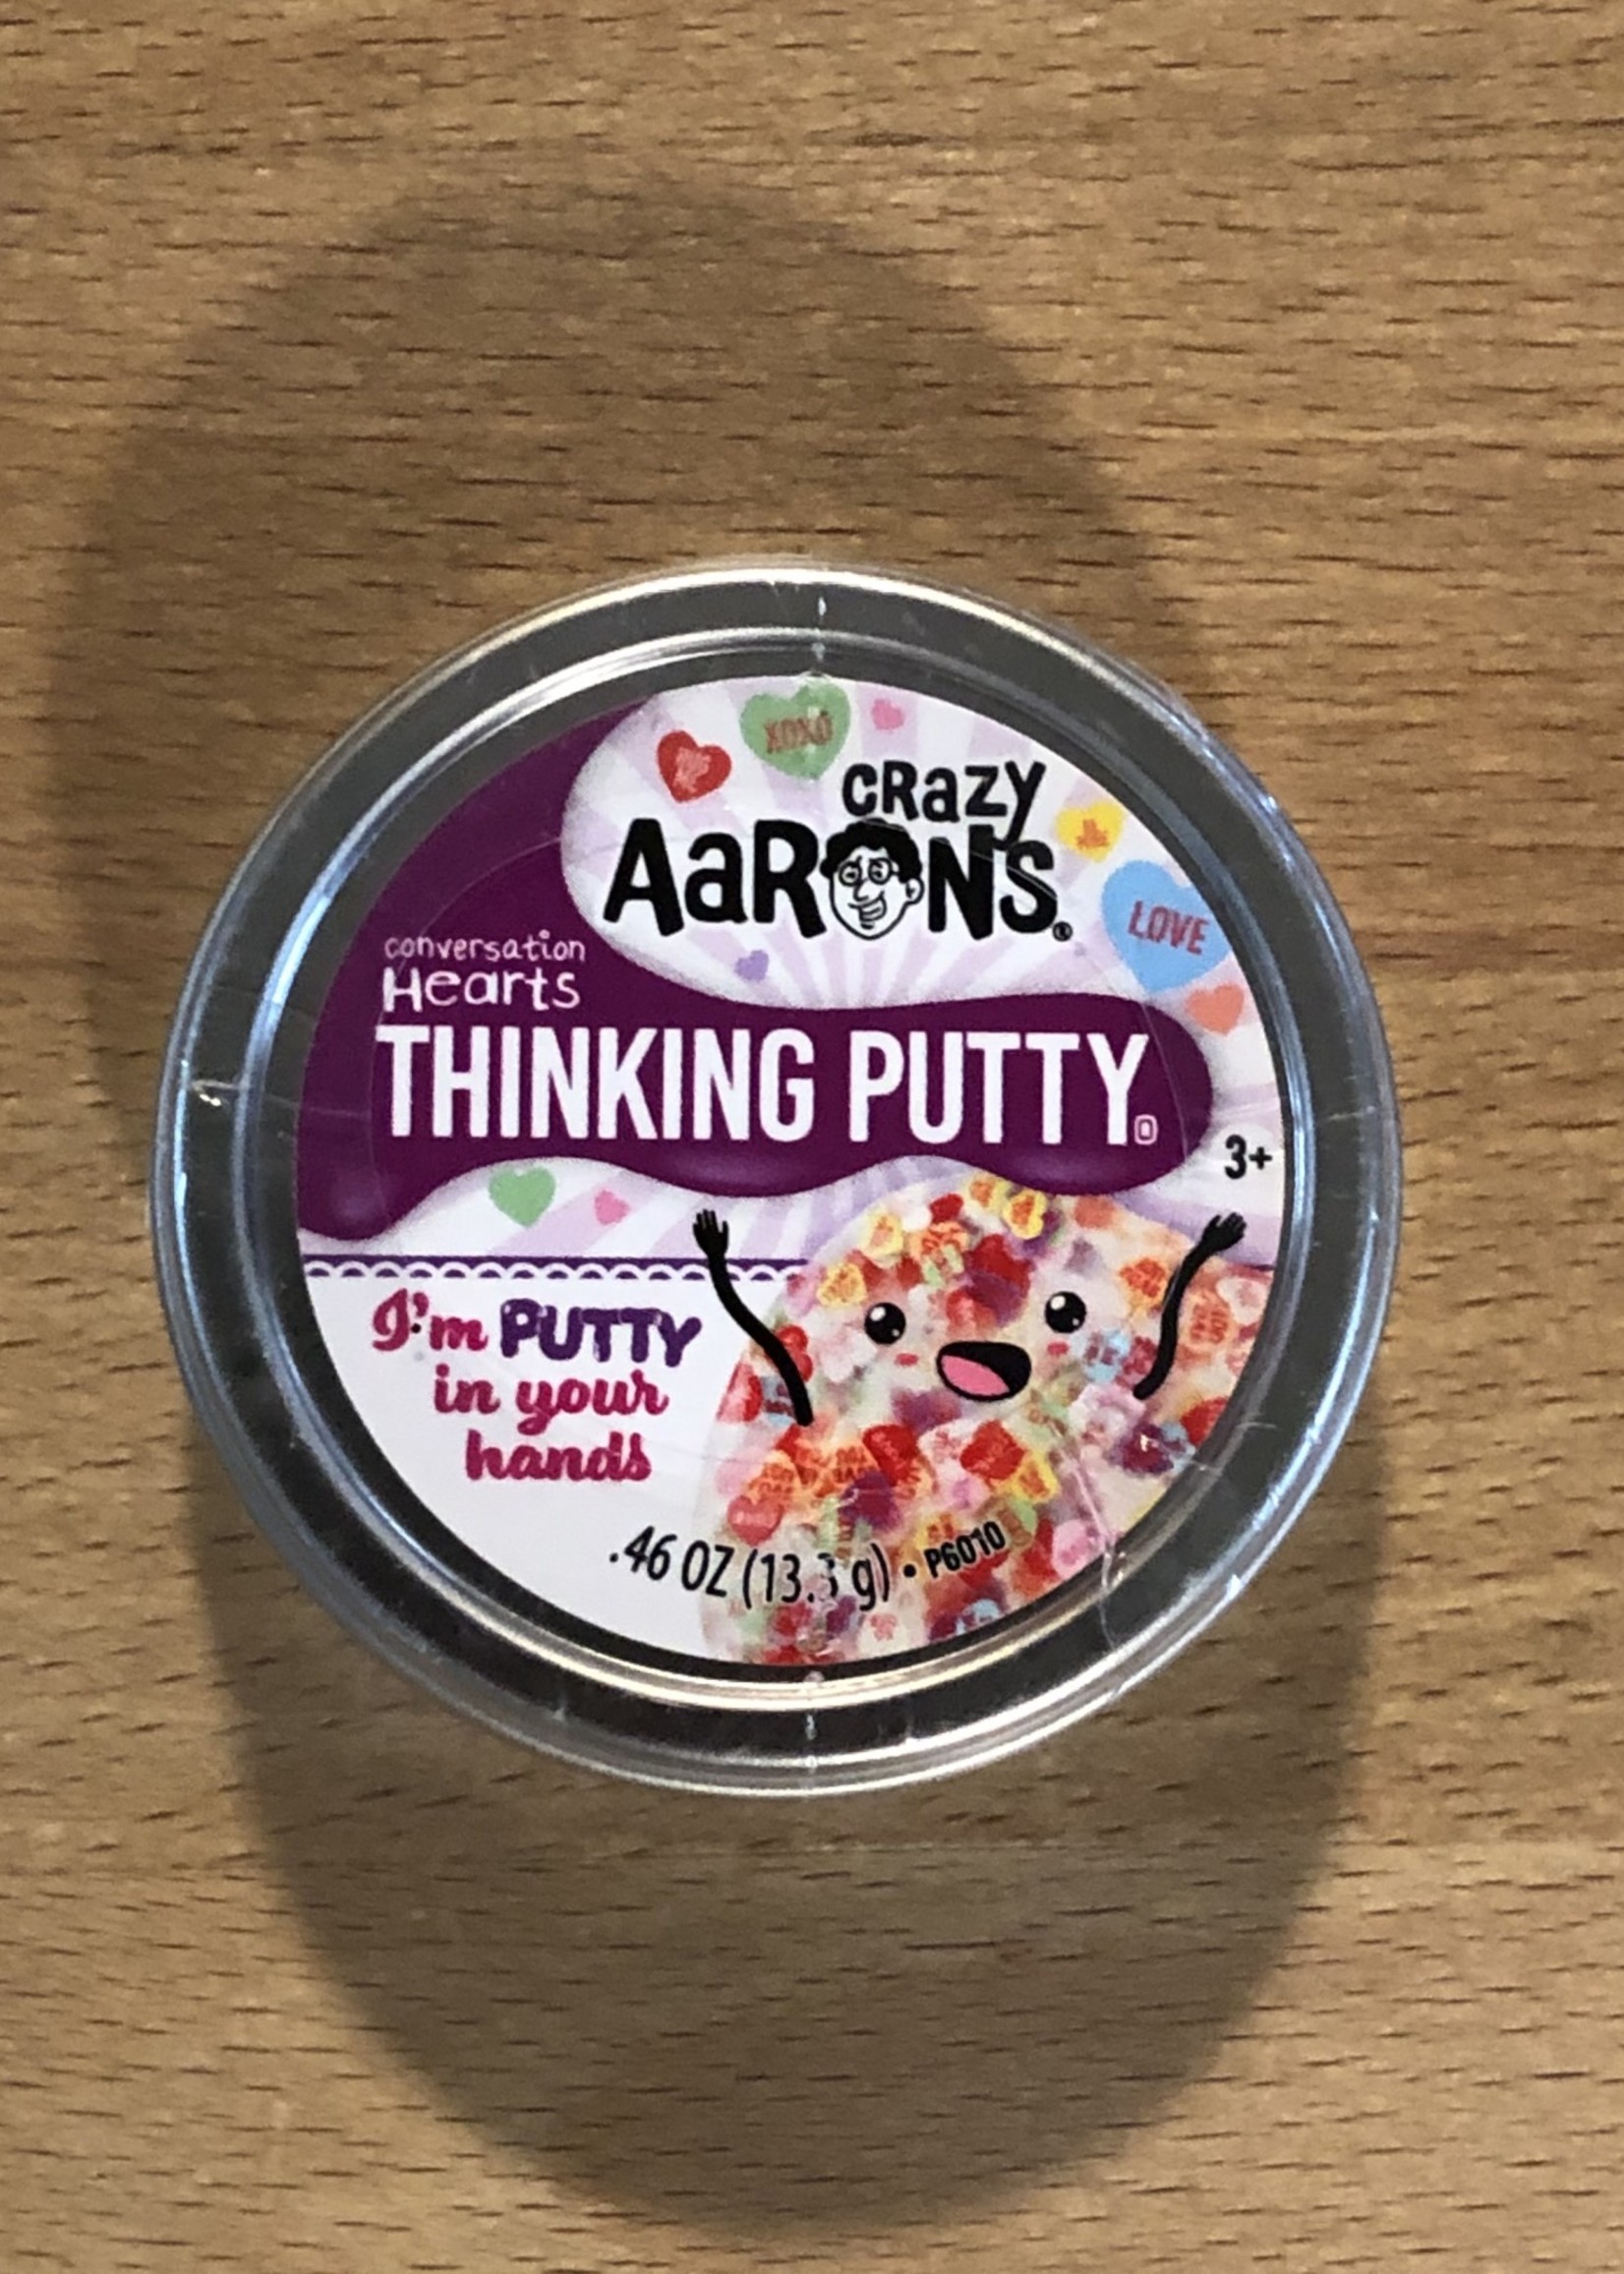 Crazy Aaron’s Thinking Putty - Conversation Hearts